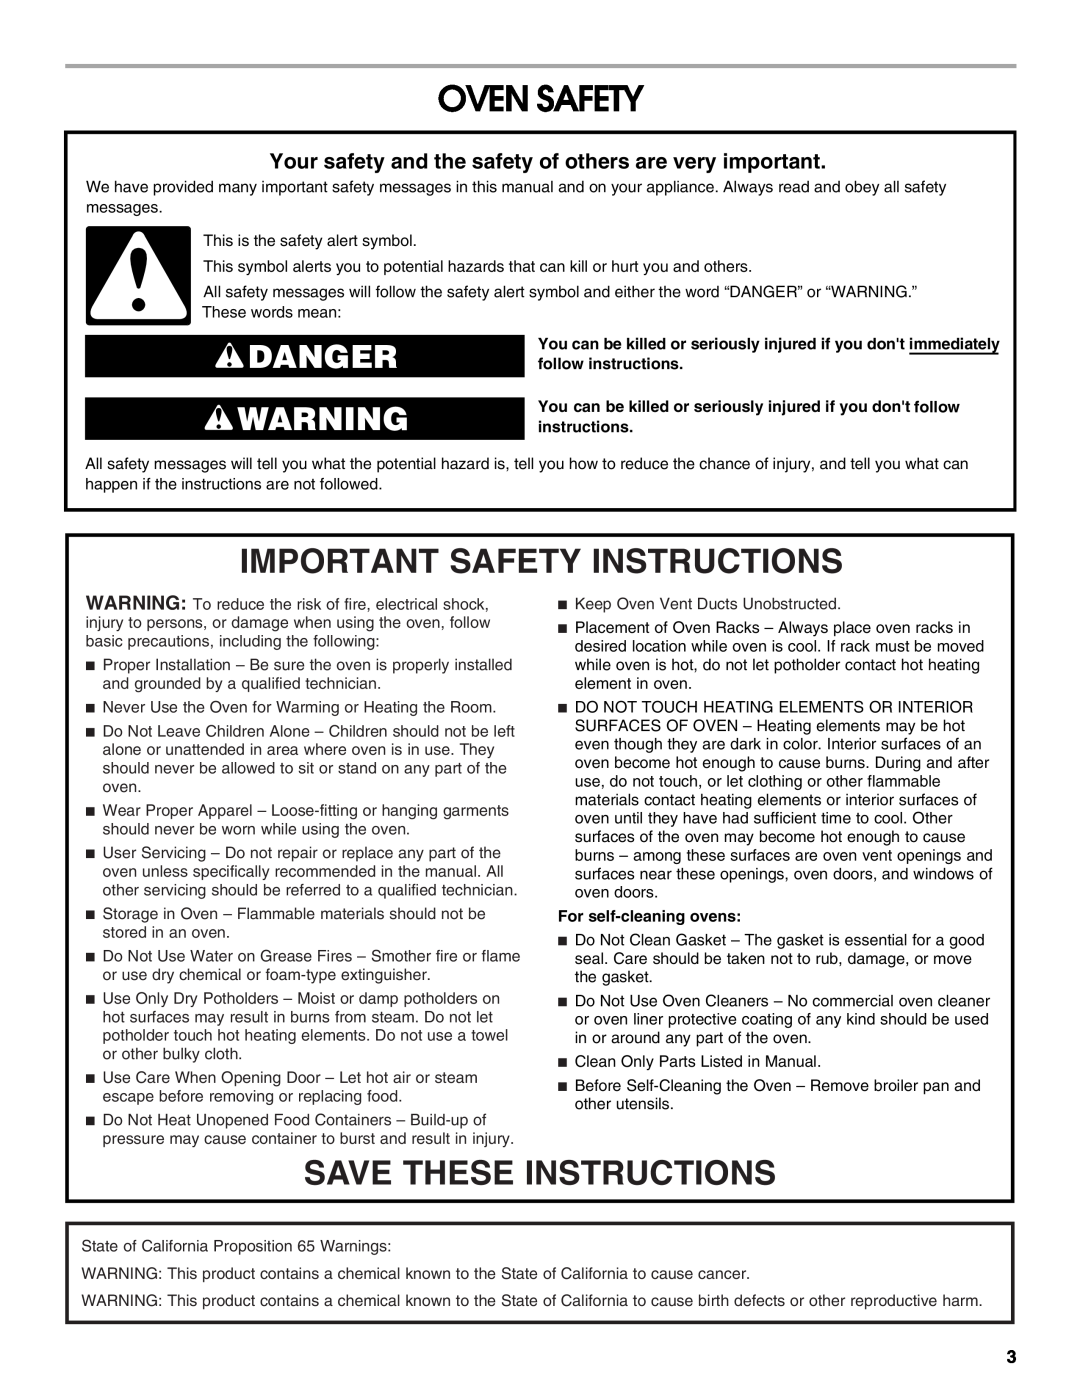 Jenn-Air JJW2827, JJW2527, JJW2730, JJW2427 manual Oven Safety, Important Safety Instructions, Save These Instructions, Danger 